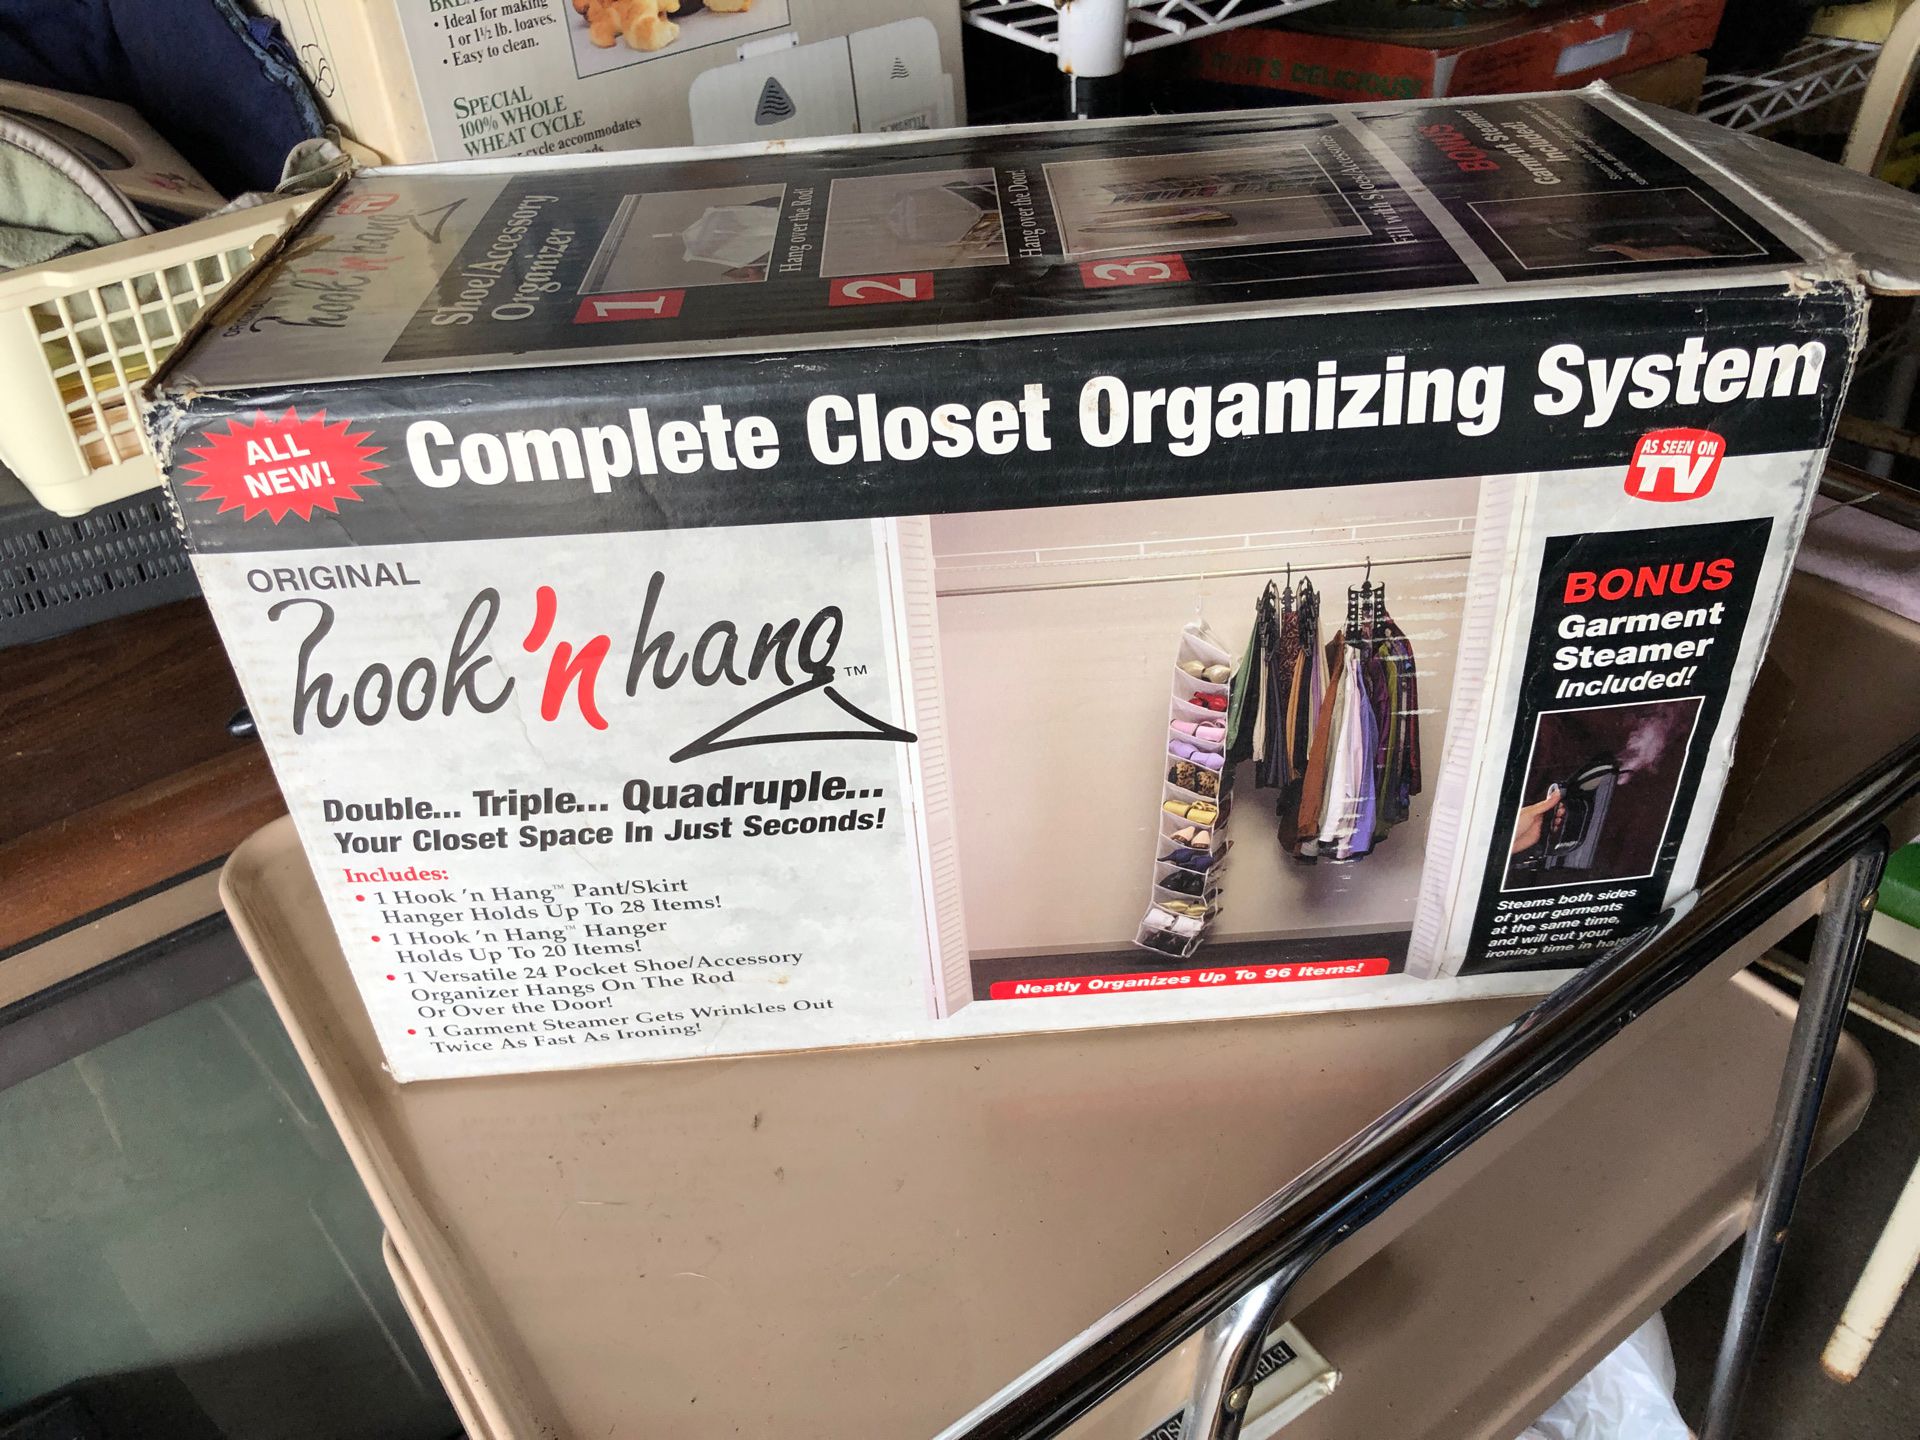 Complete closet organizing system brand new.